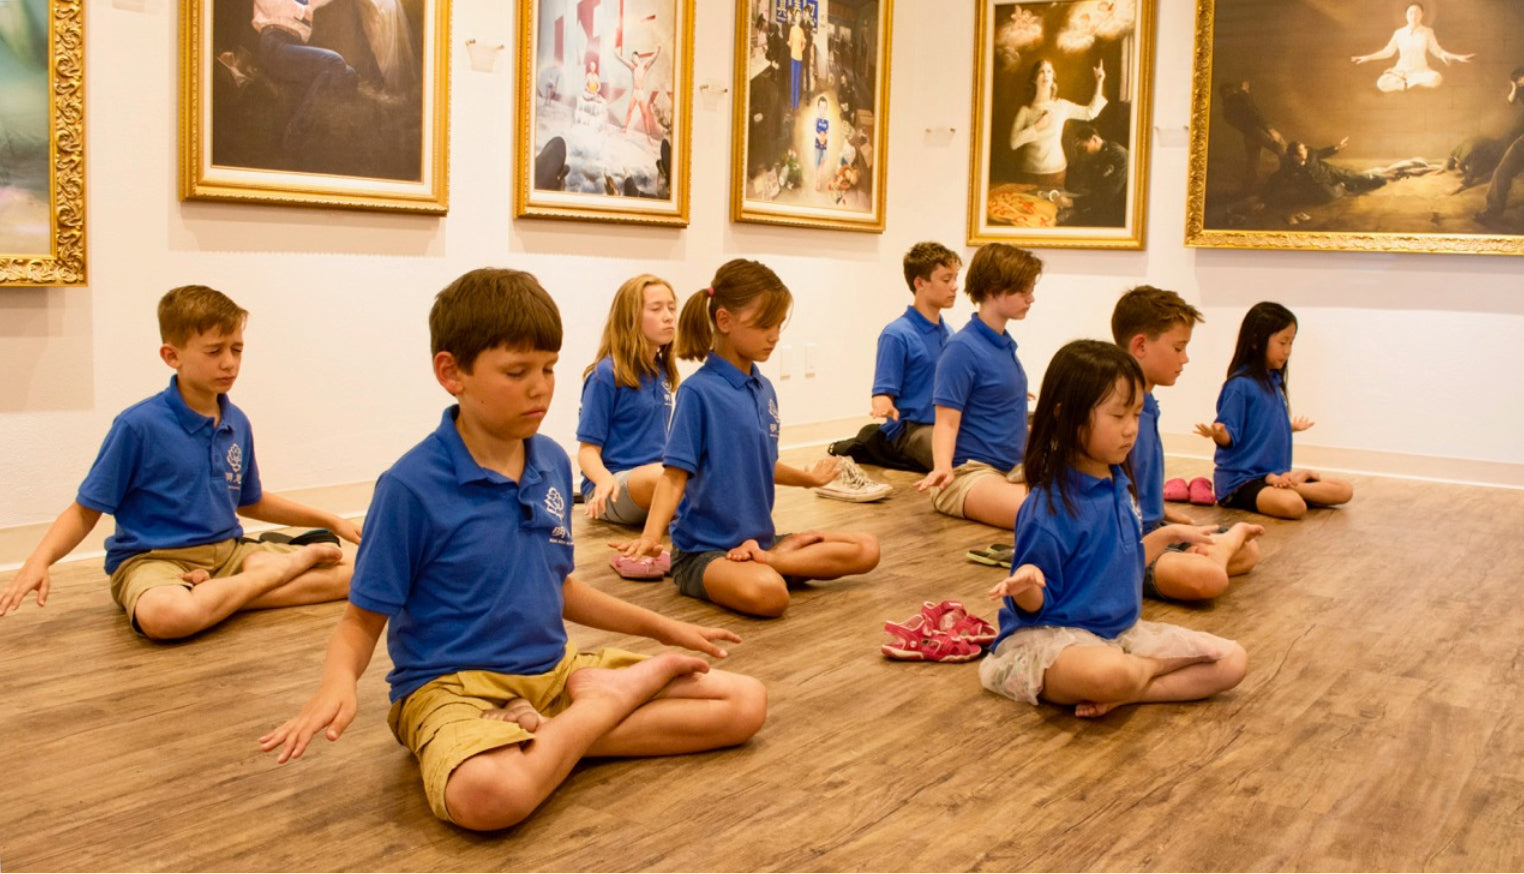  Benefits Of Meditation For Children